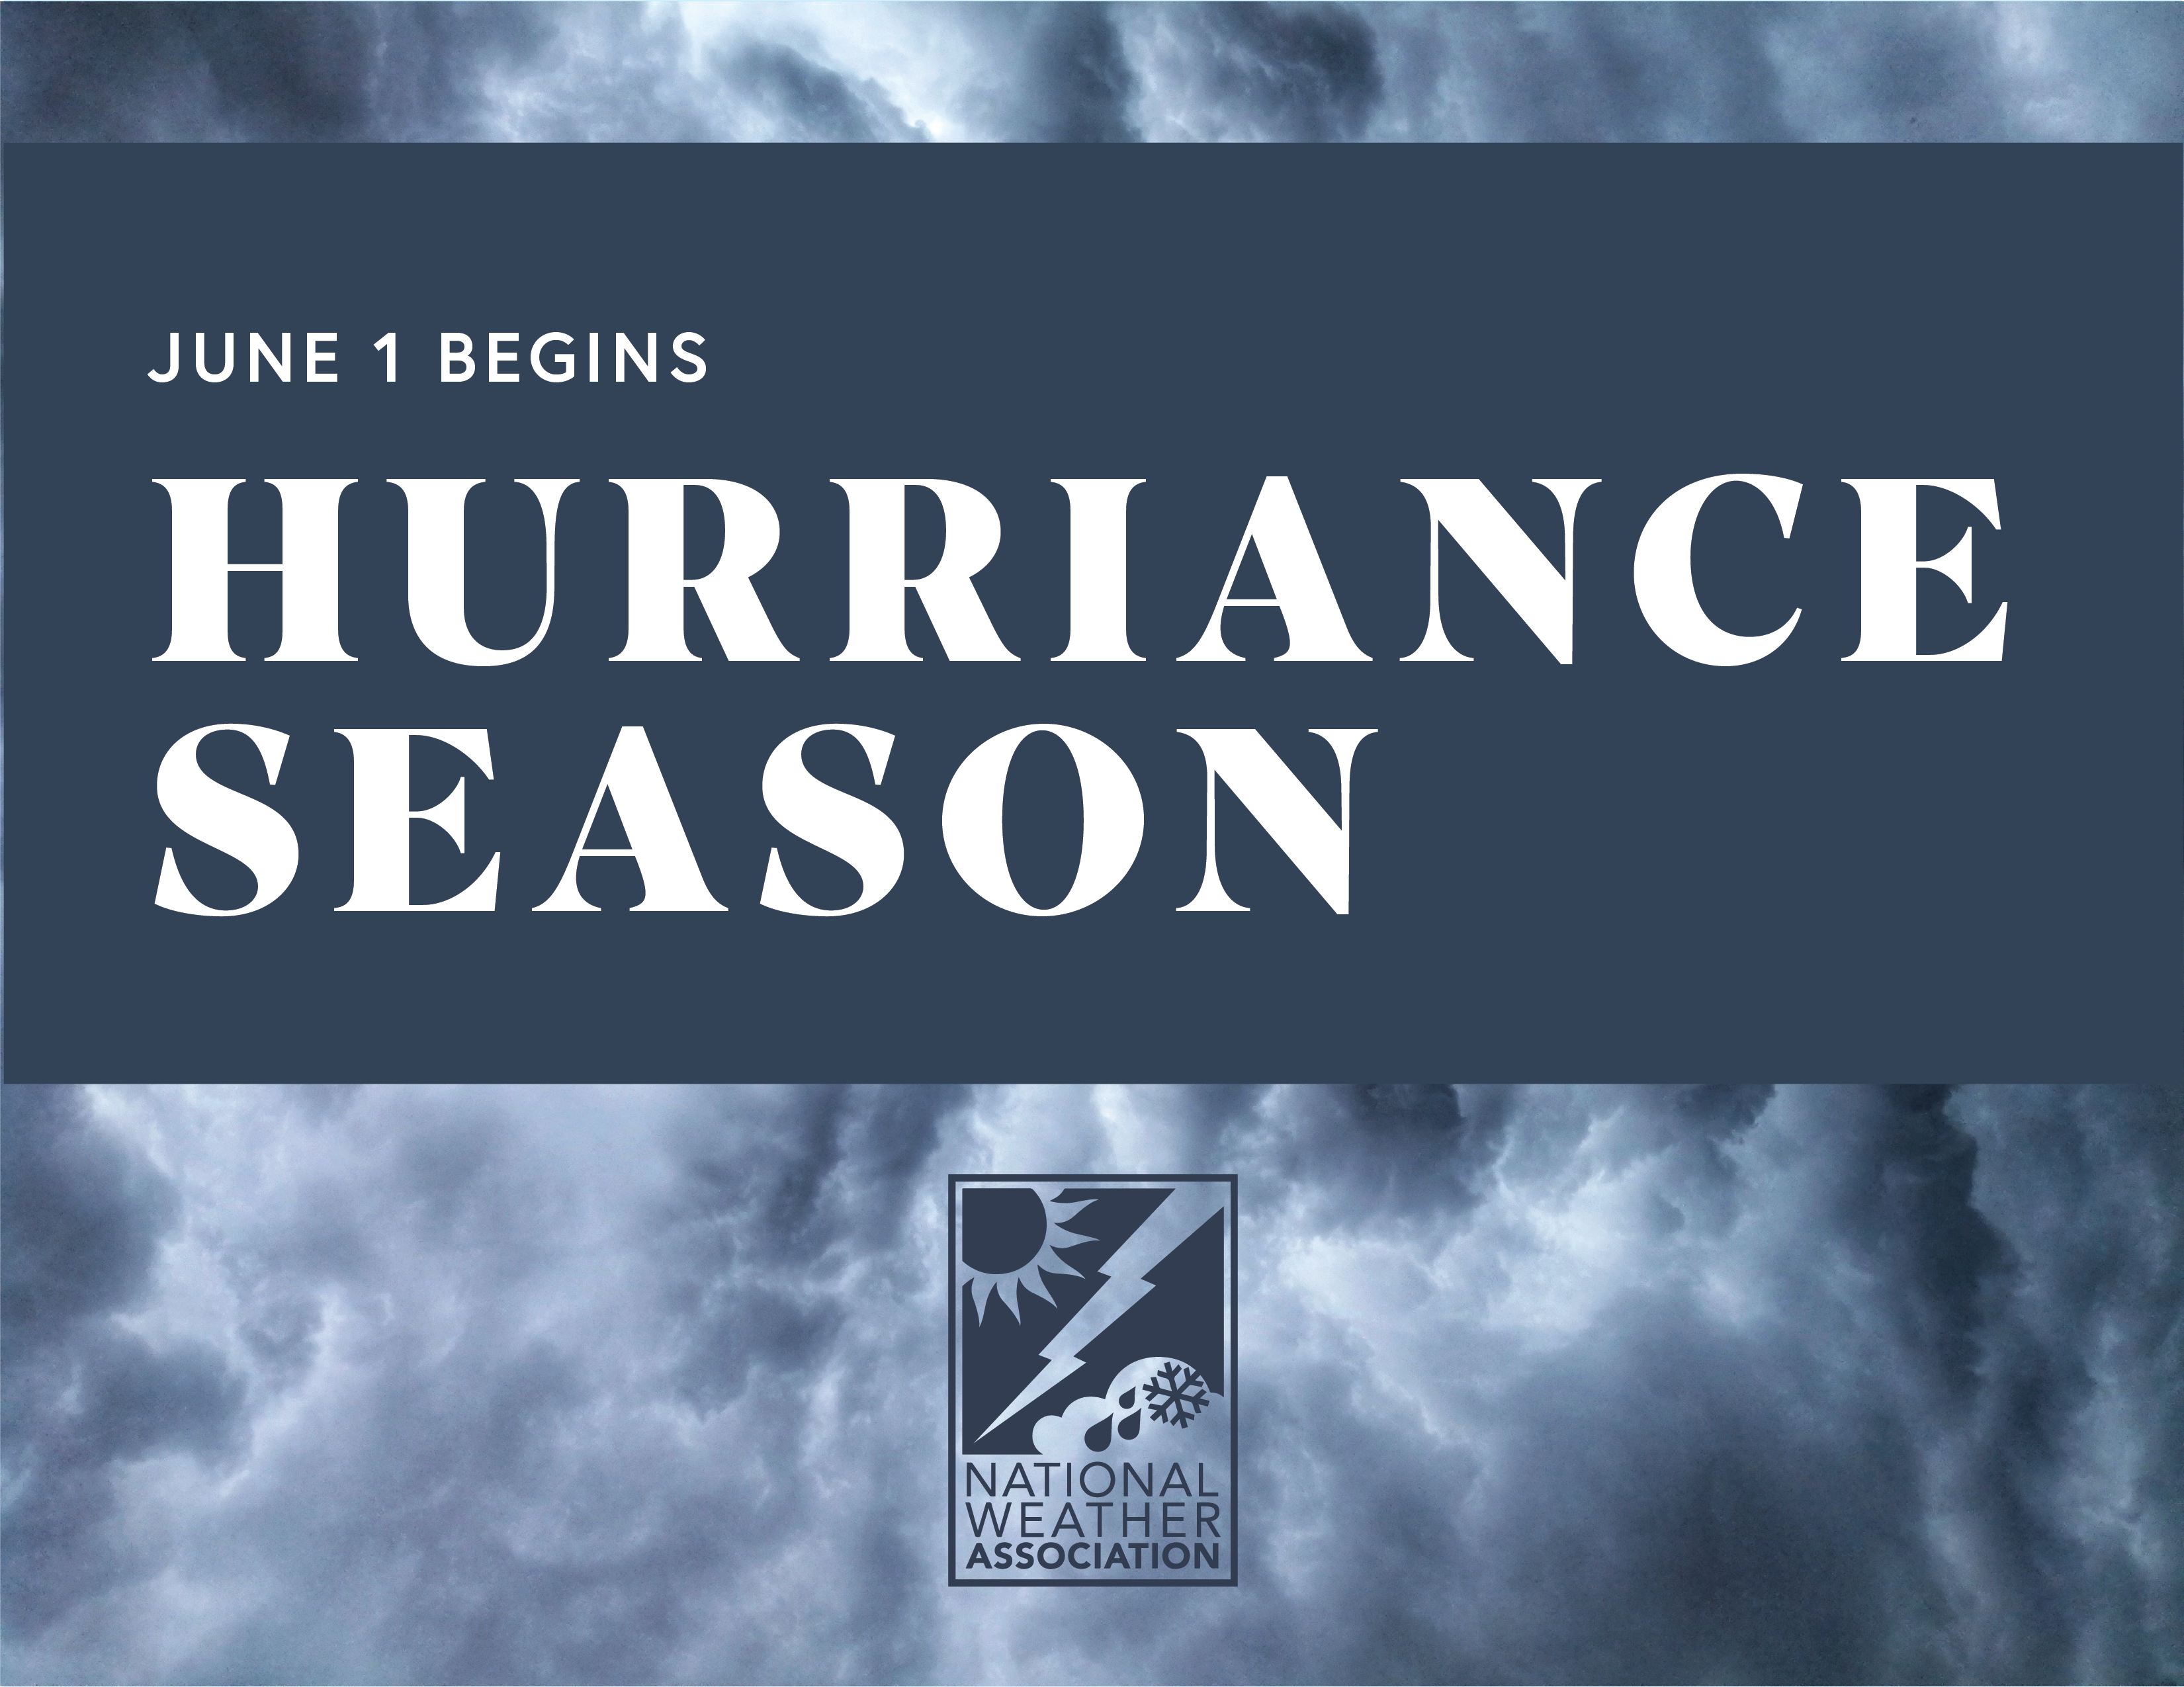 June 1 begins Hurricane Season. 